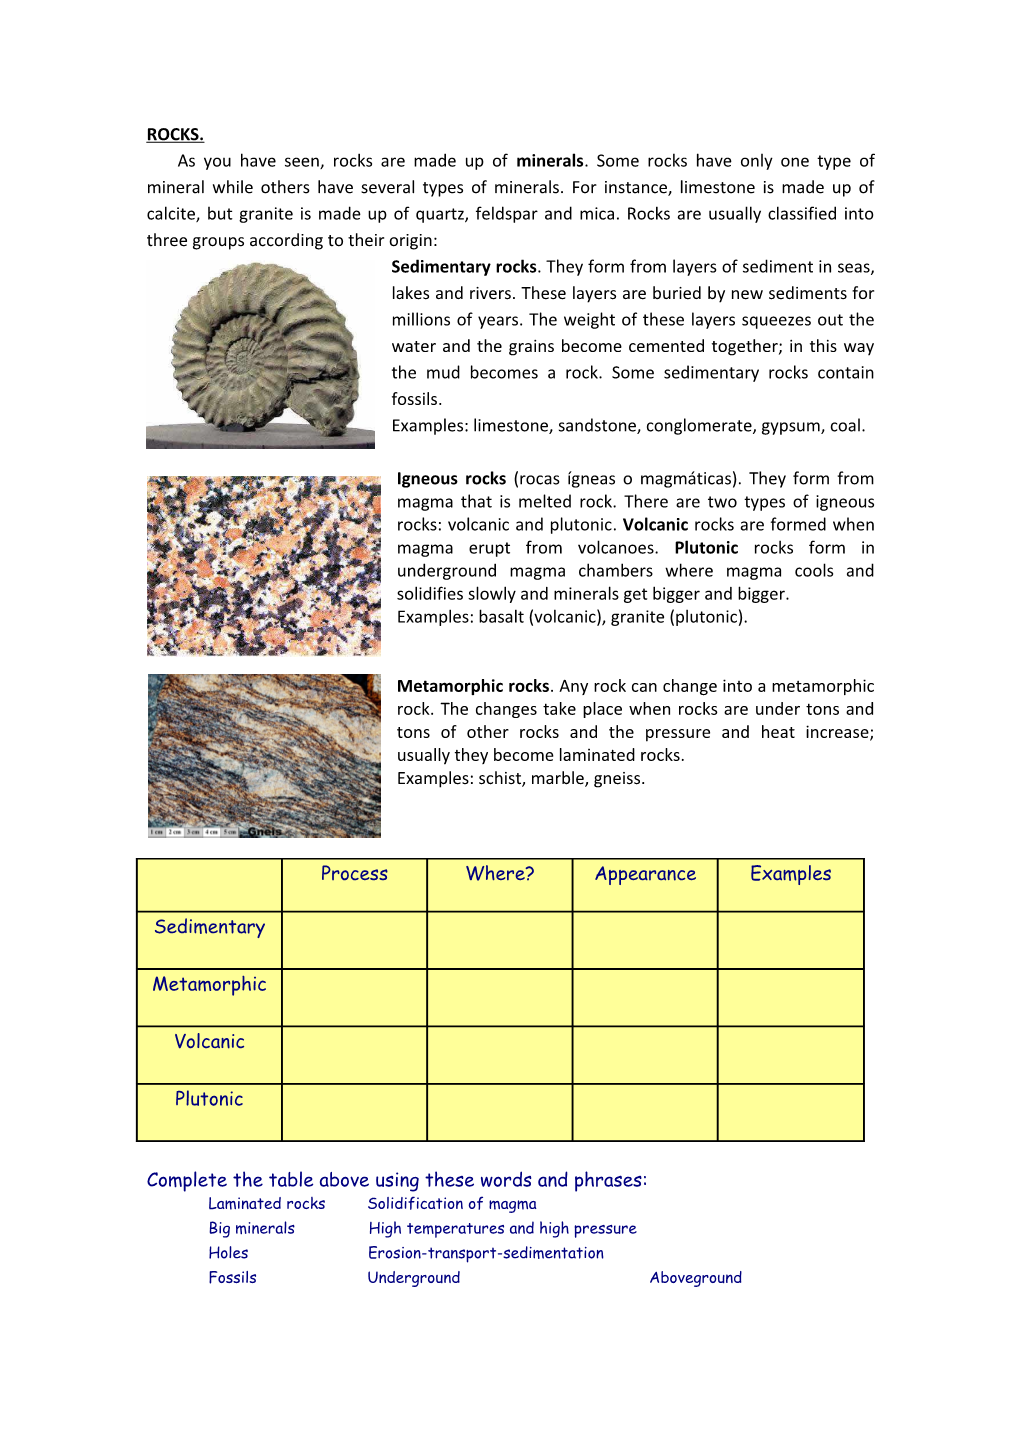 Examples: Limestone, Sandstone, Conglomerate, Gypsum, Coal